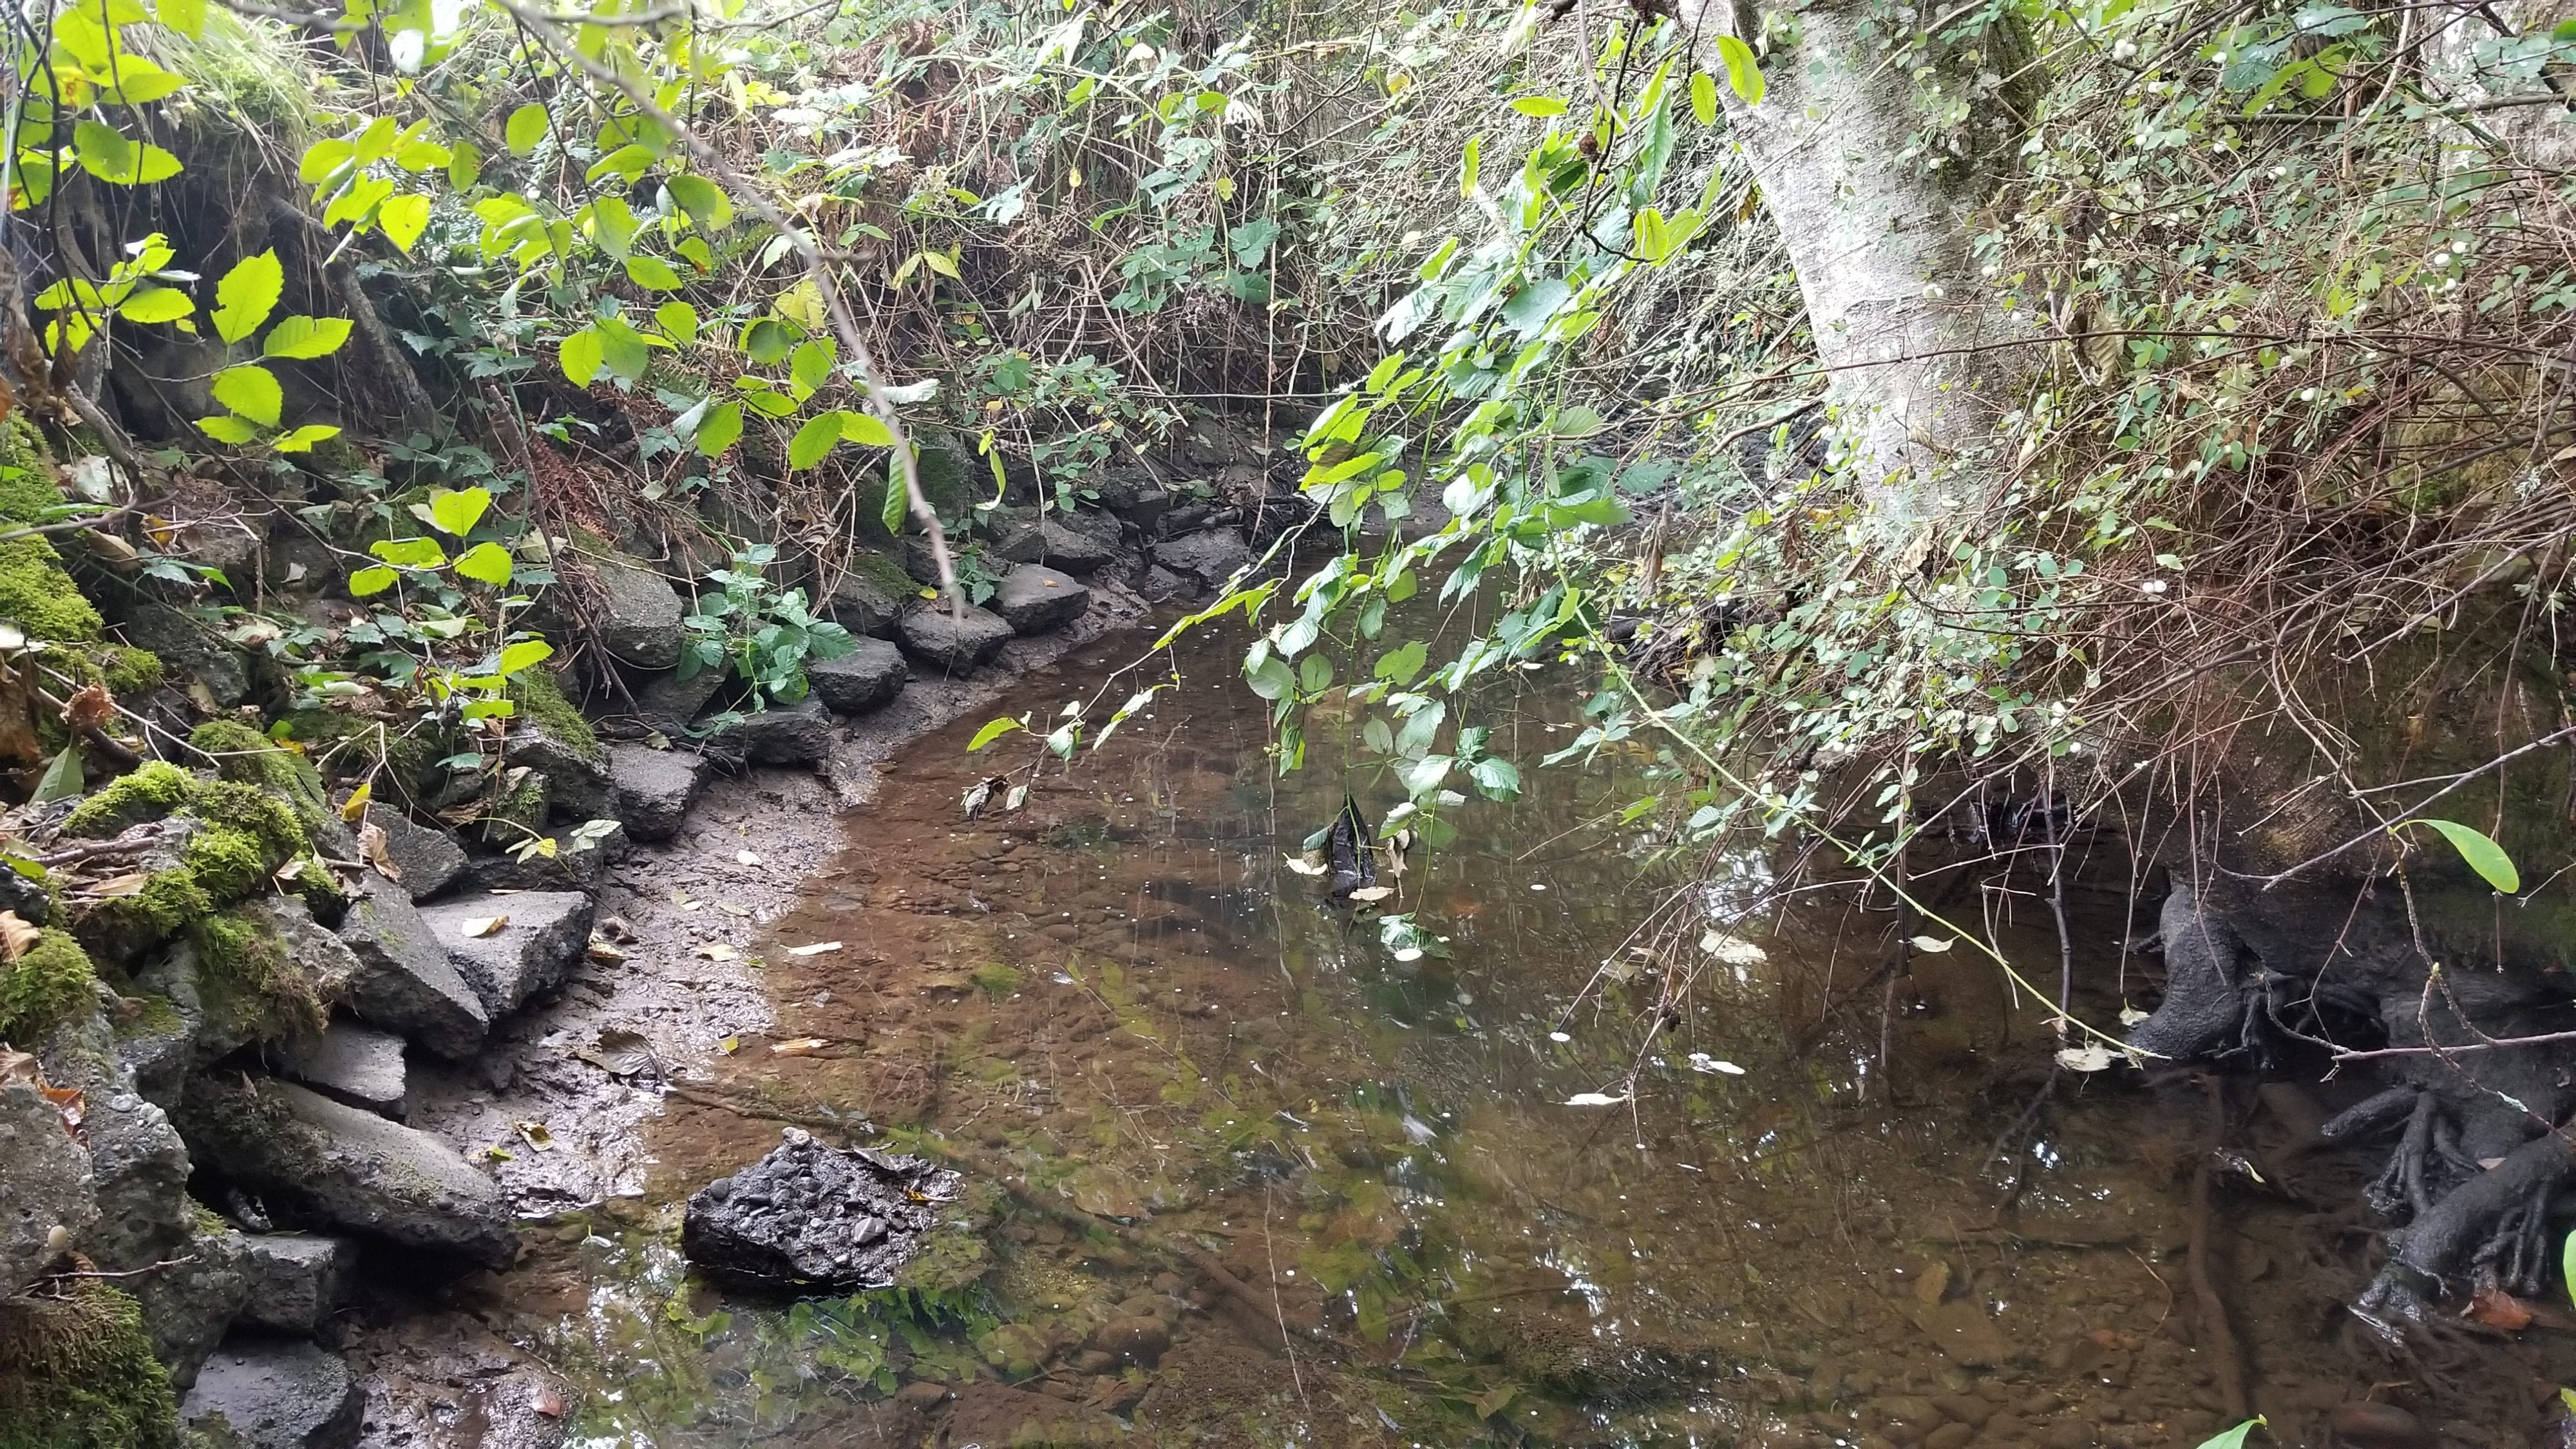 Creek with trees and rocks alongside it